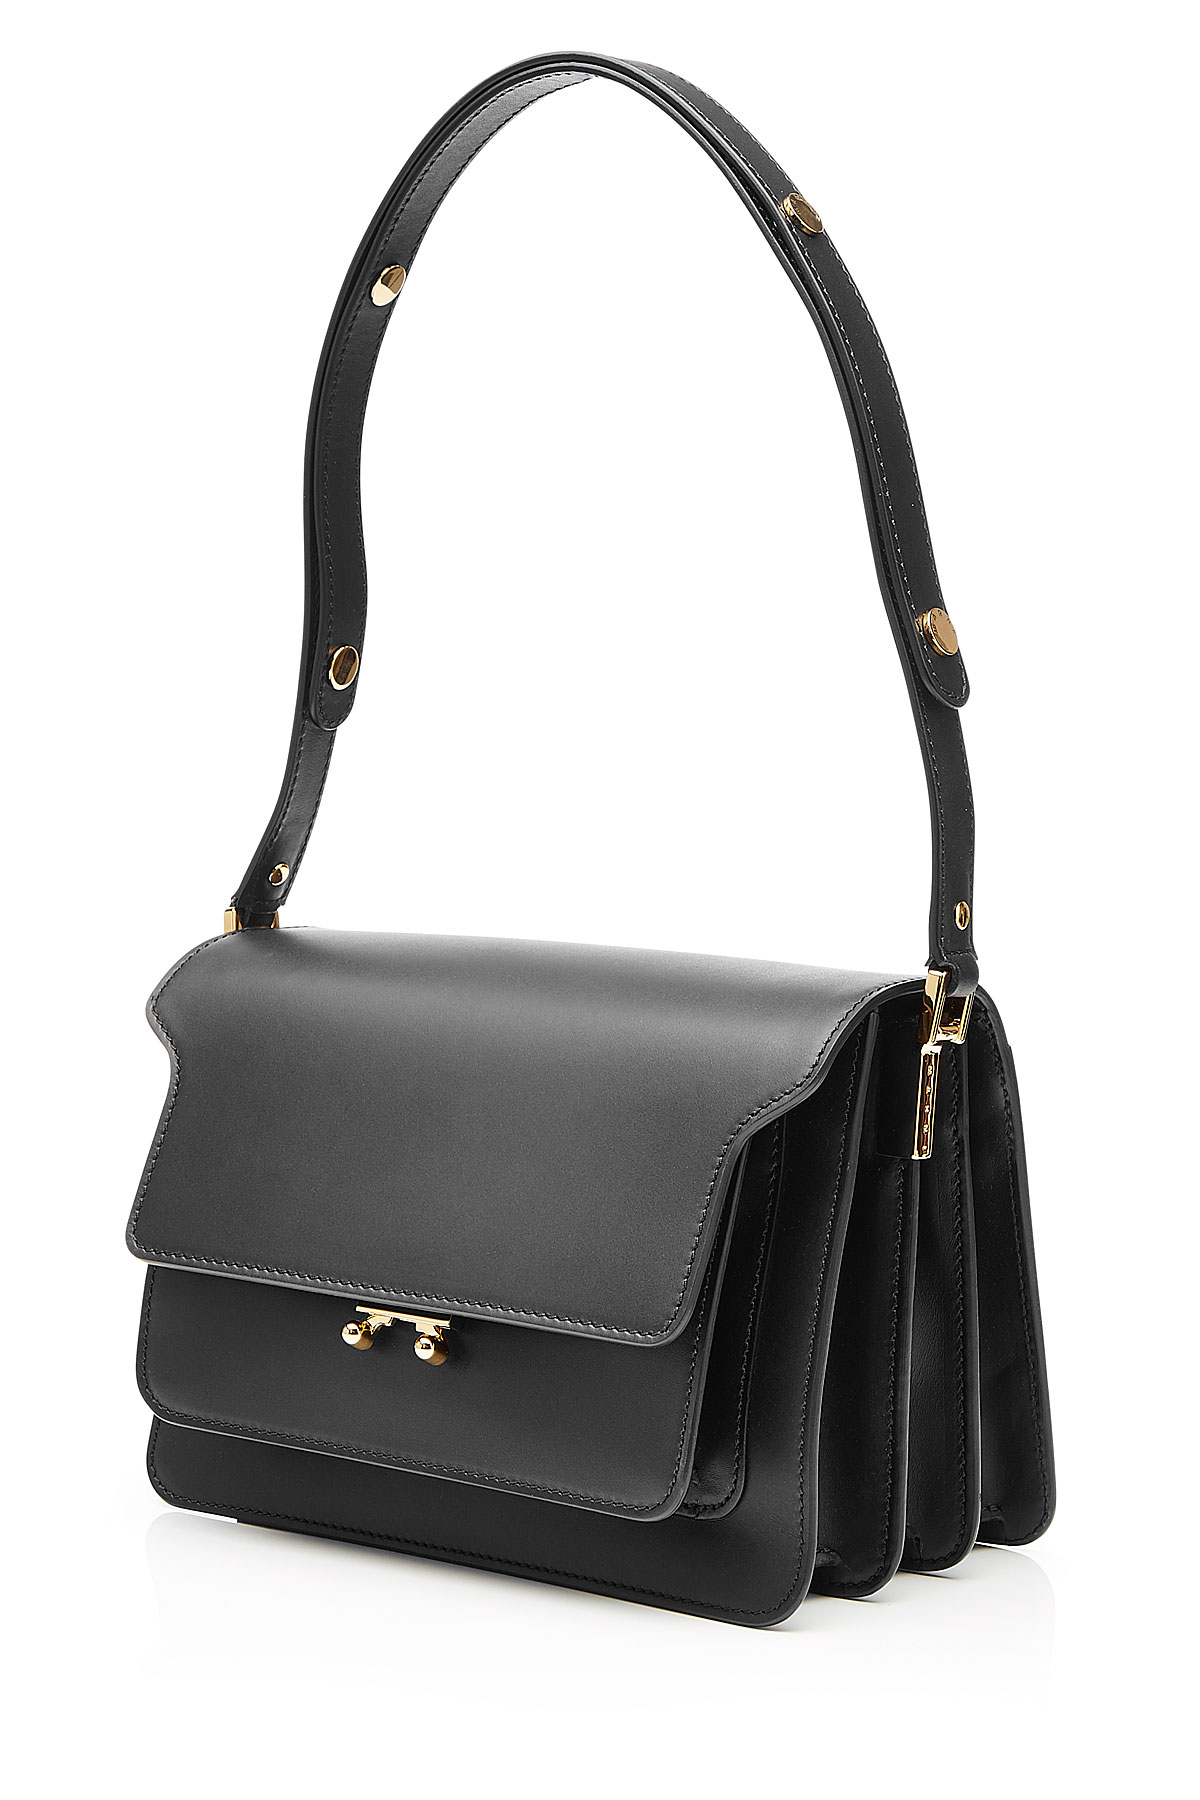 Marni Trunk Medium Leather Shoulder Bag - Black in Black | Lyst